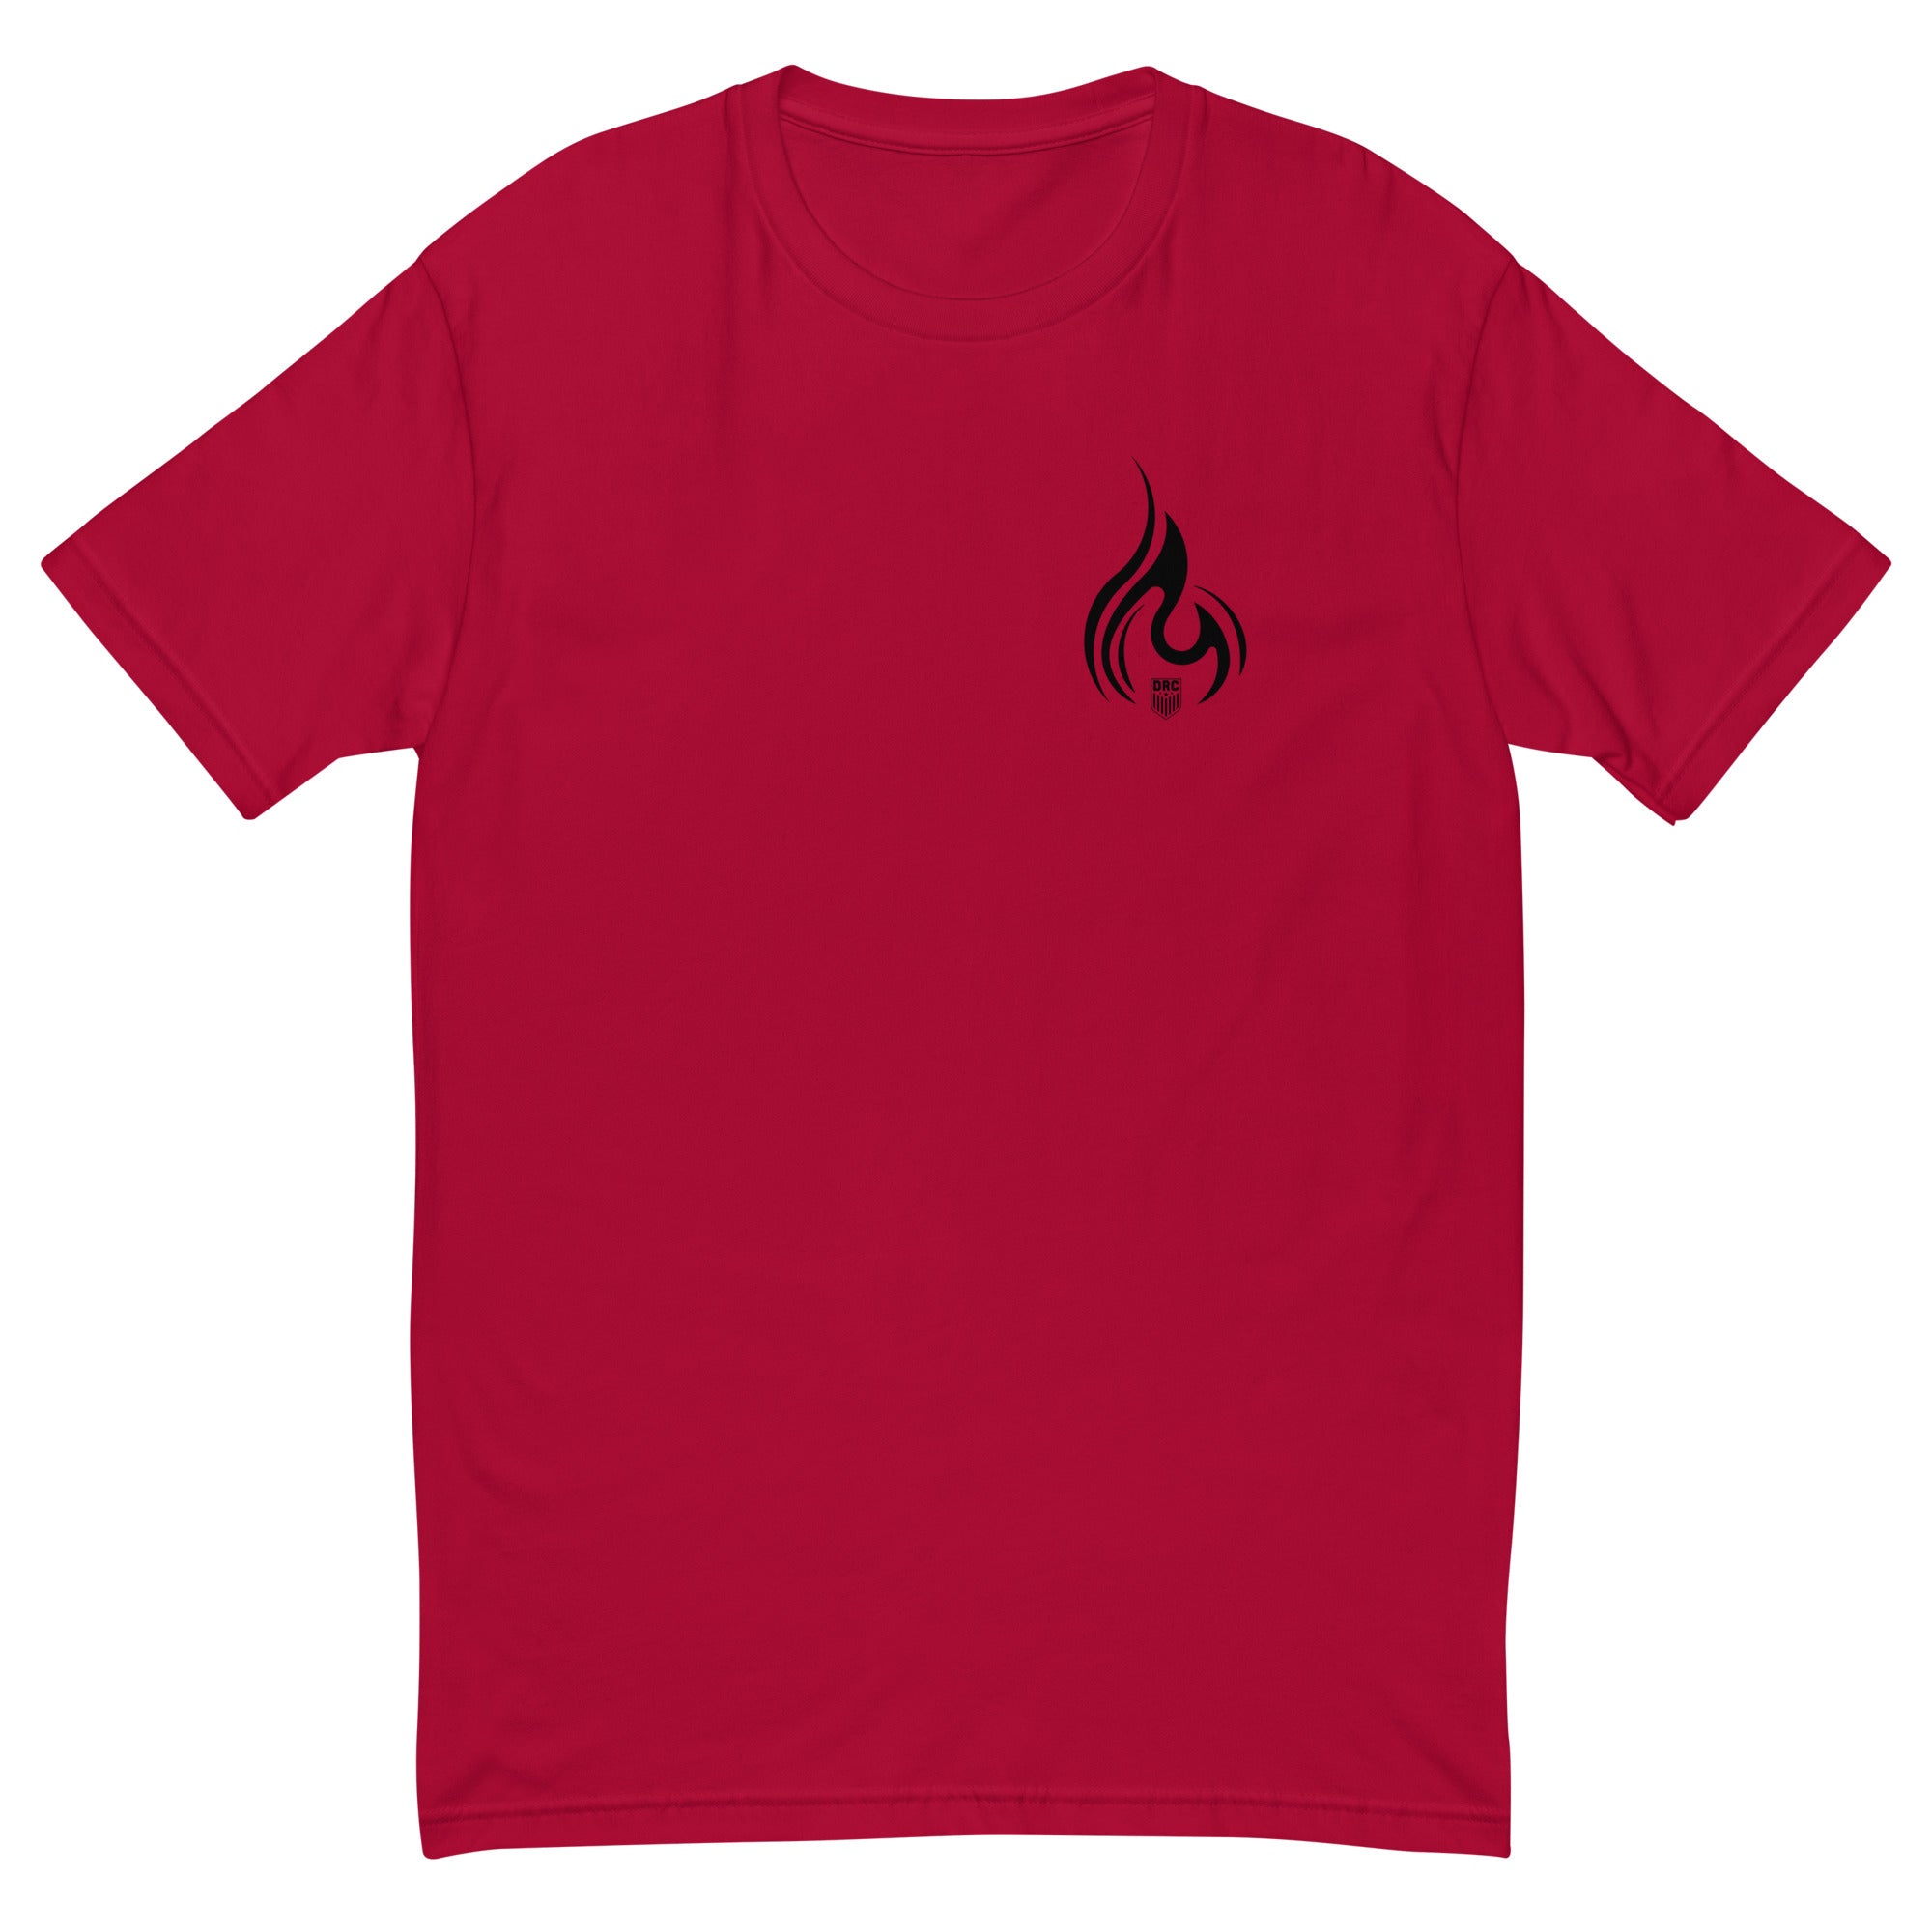 Keep the Fire Burning Short Sleeve T-shirt